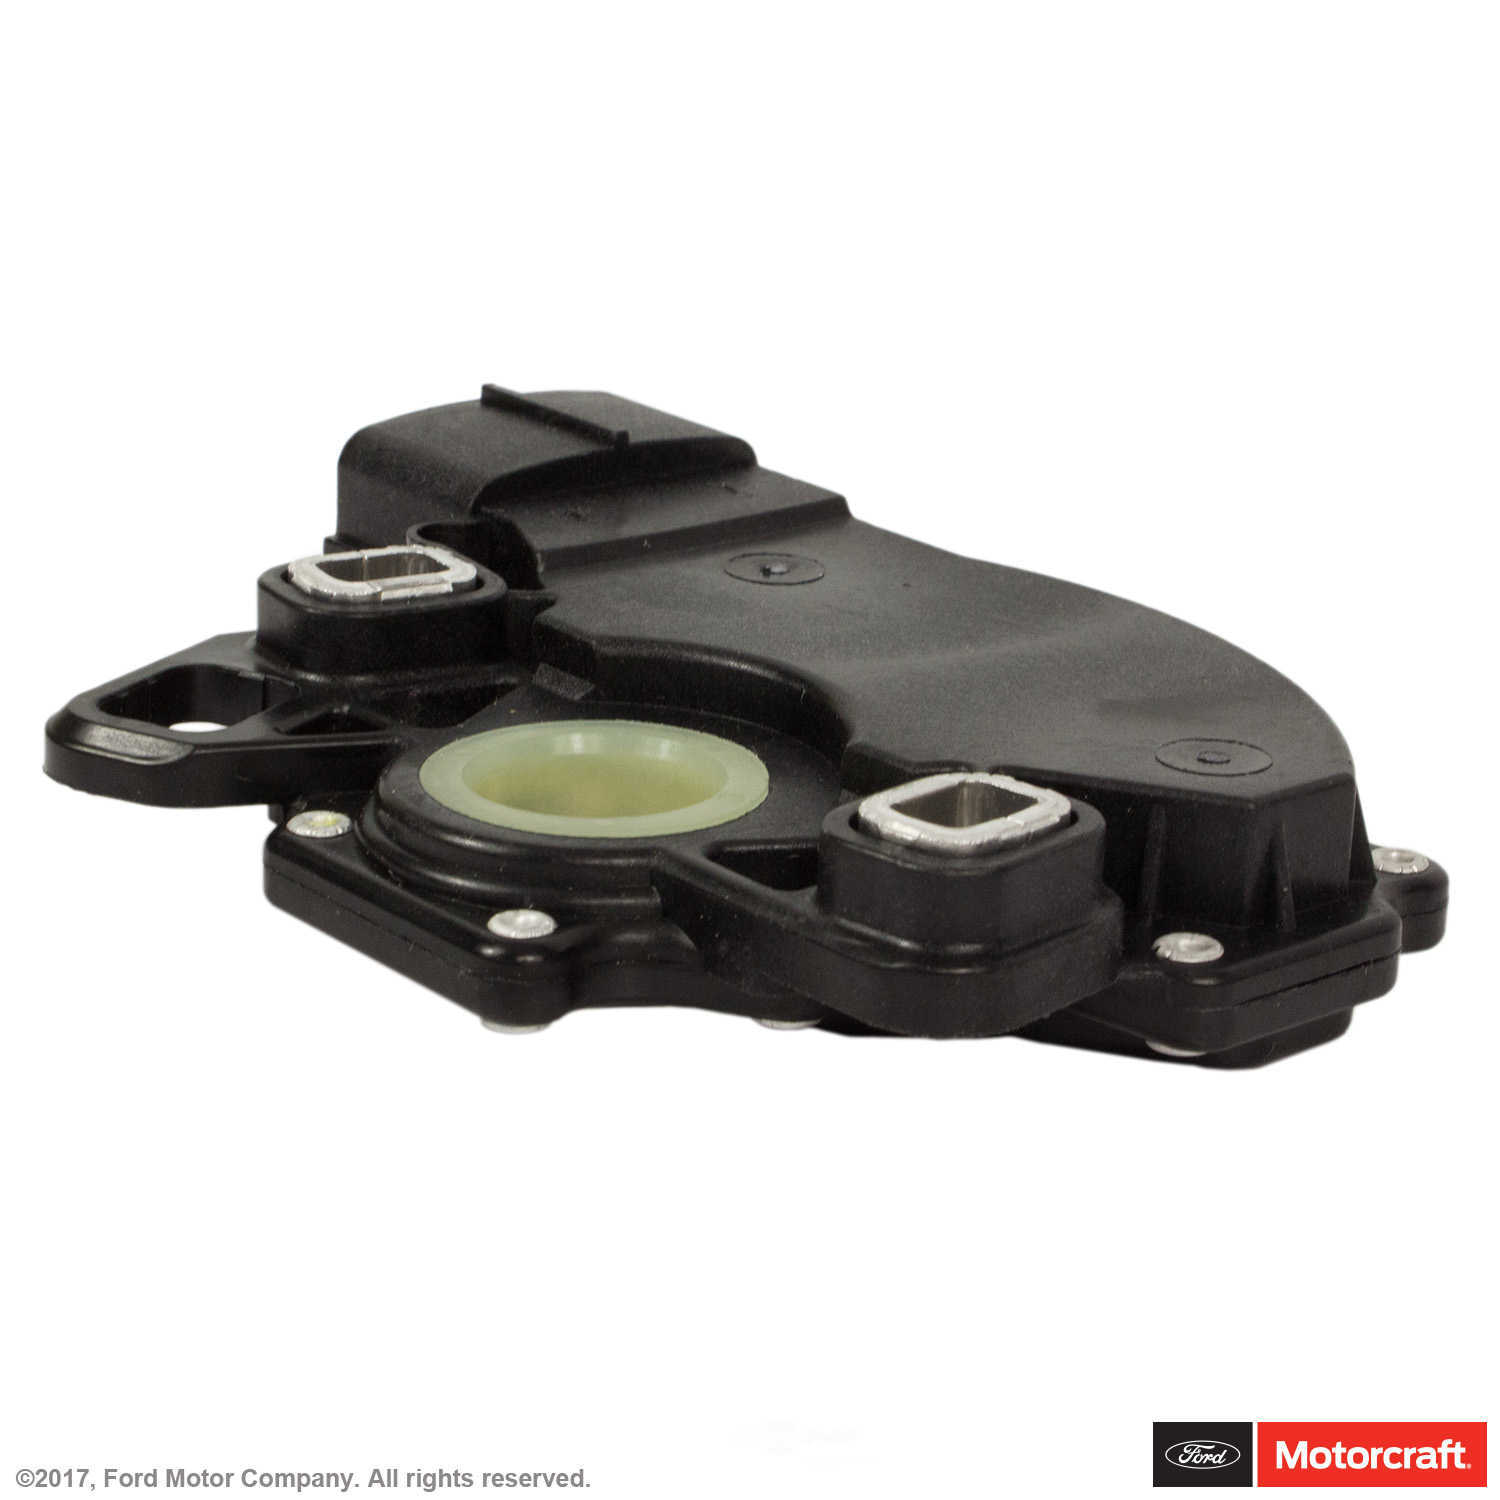 MOTORCRAFT - Transfer Case Manual Lever Position Sensor - MOT SW-6252